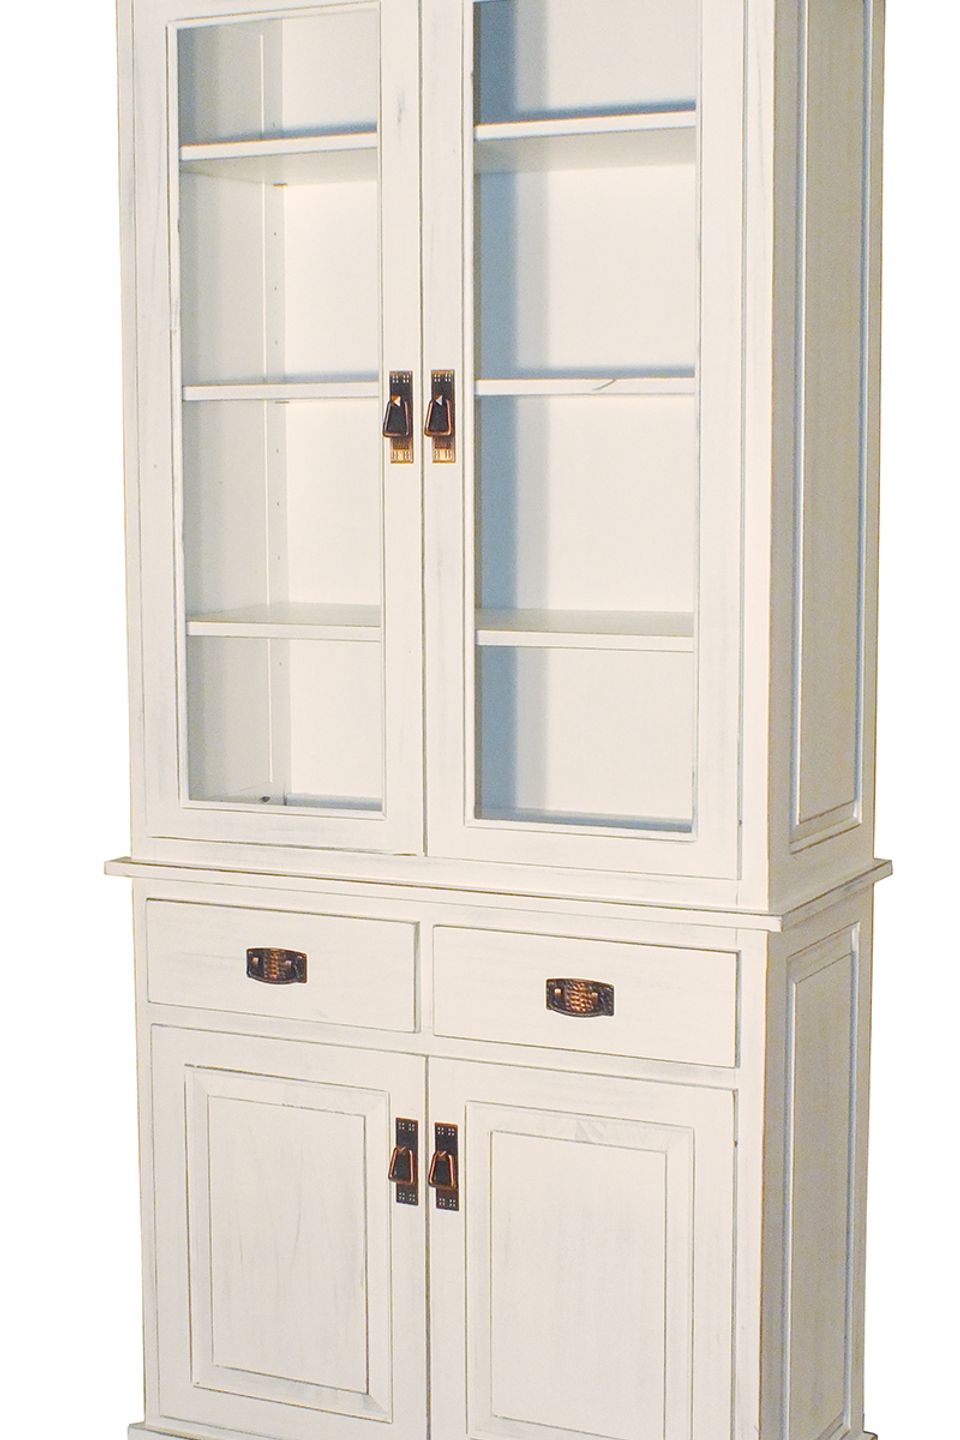 Farm dscf1680 white china cabinet